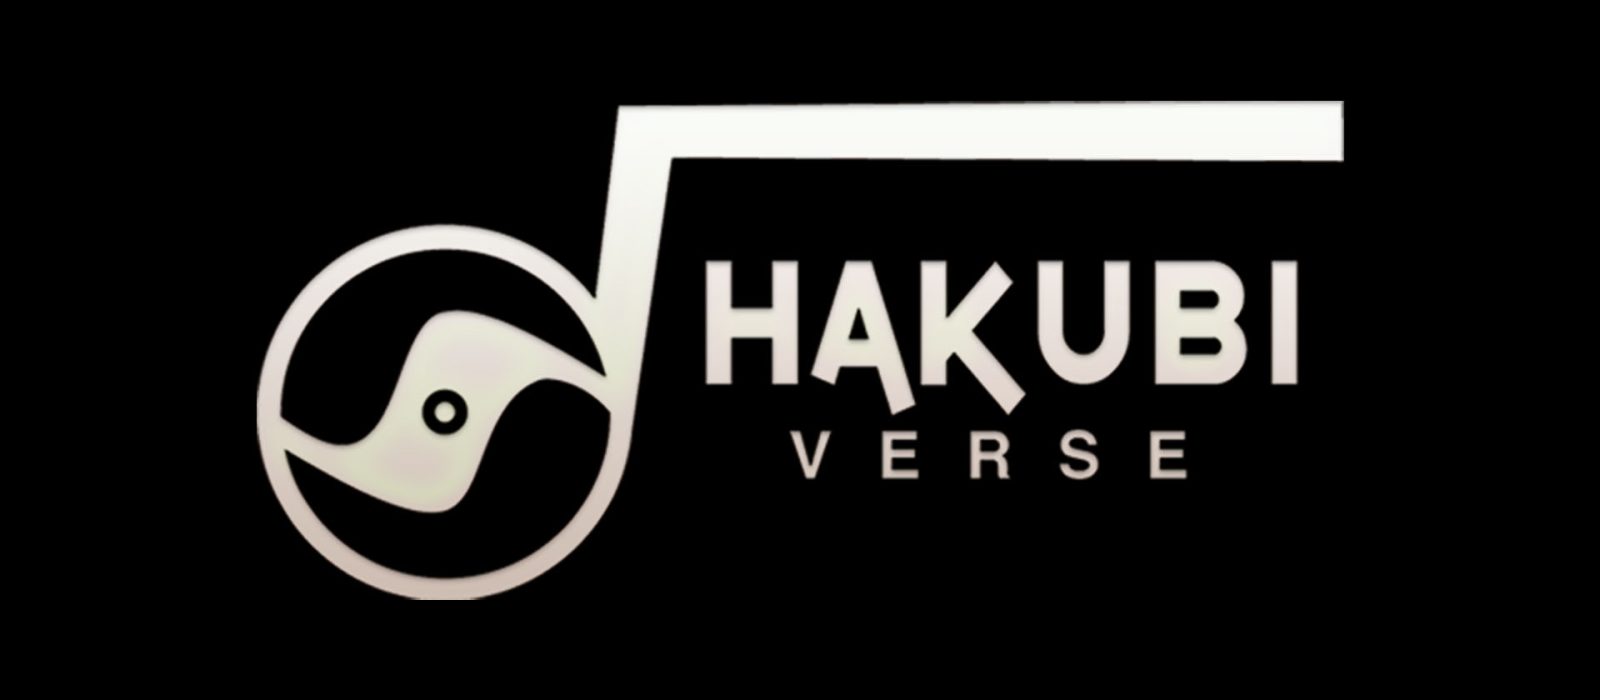 HakubiVerse-Gold-logo-black-background